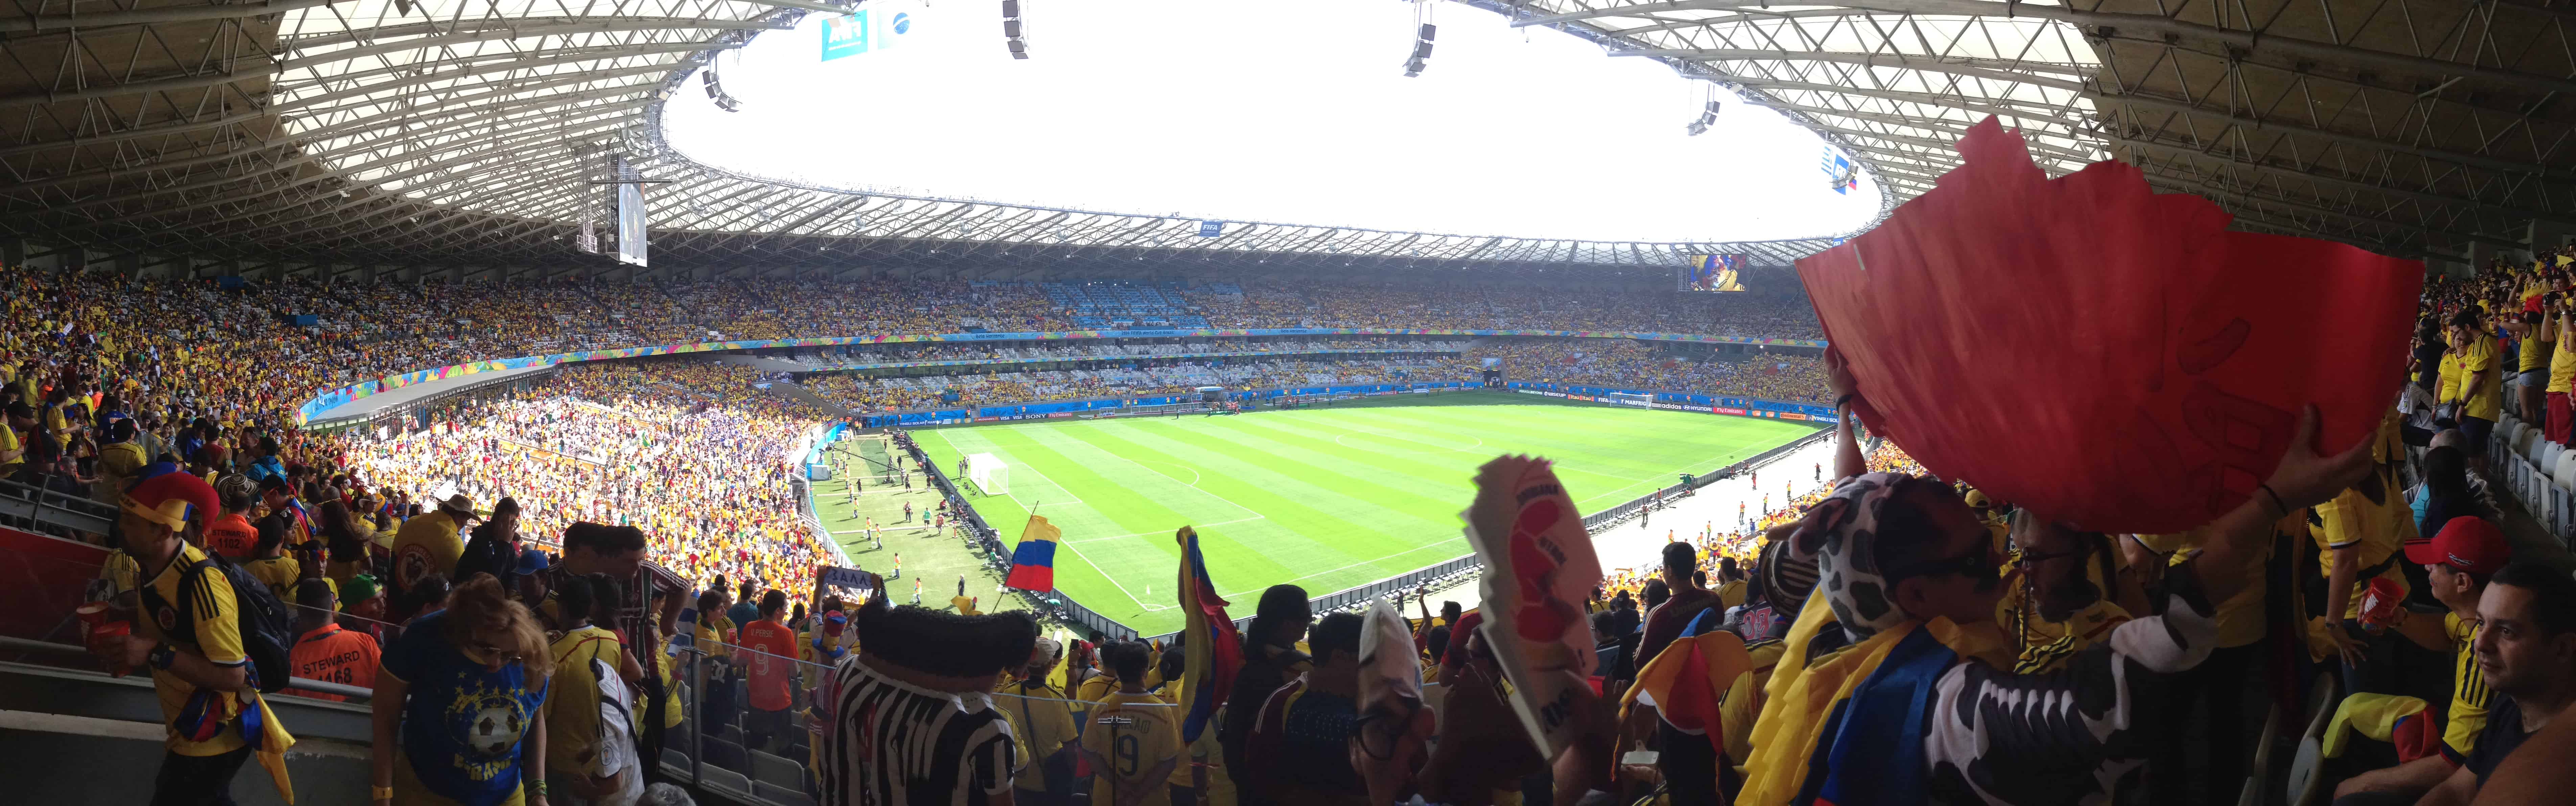 2014 World Cup at Estádio Mineirão in Belo Horizonte, Brazil